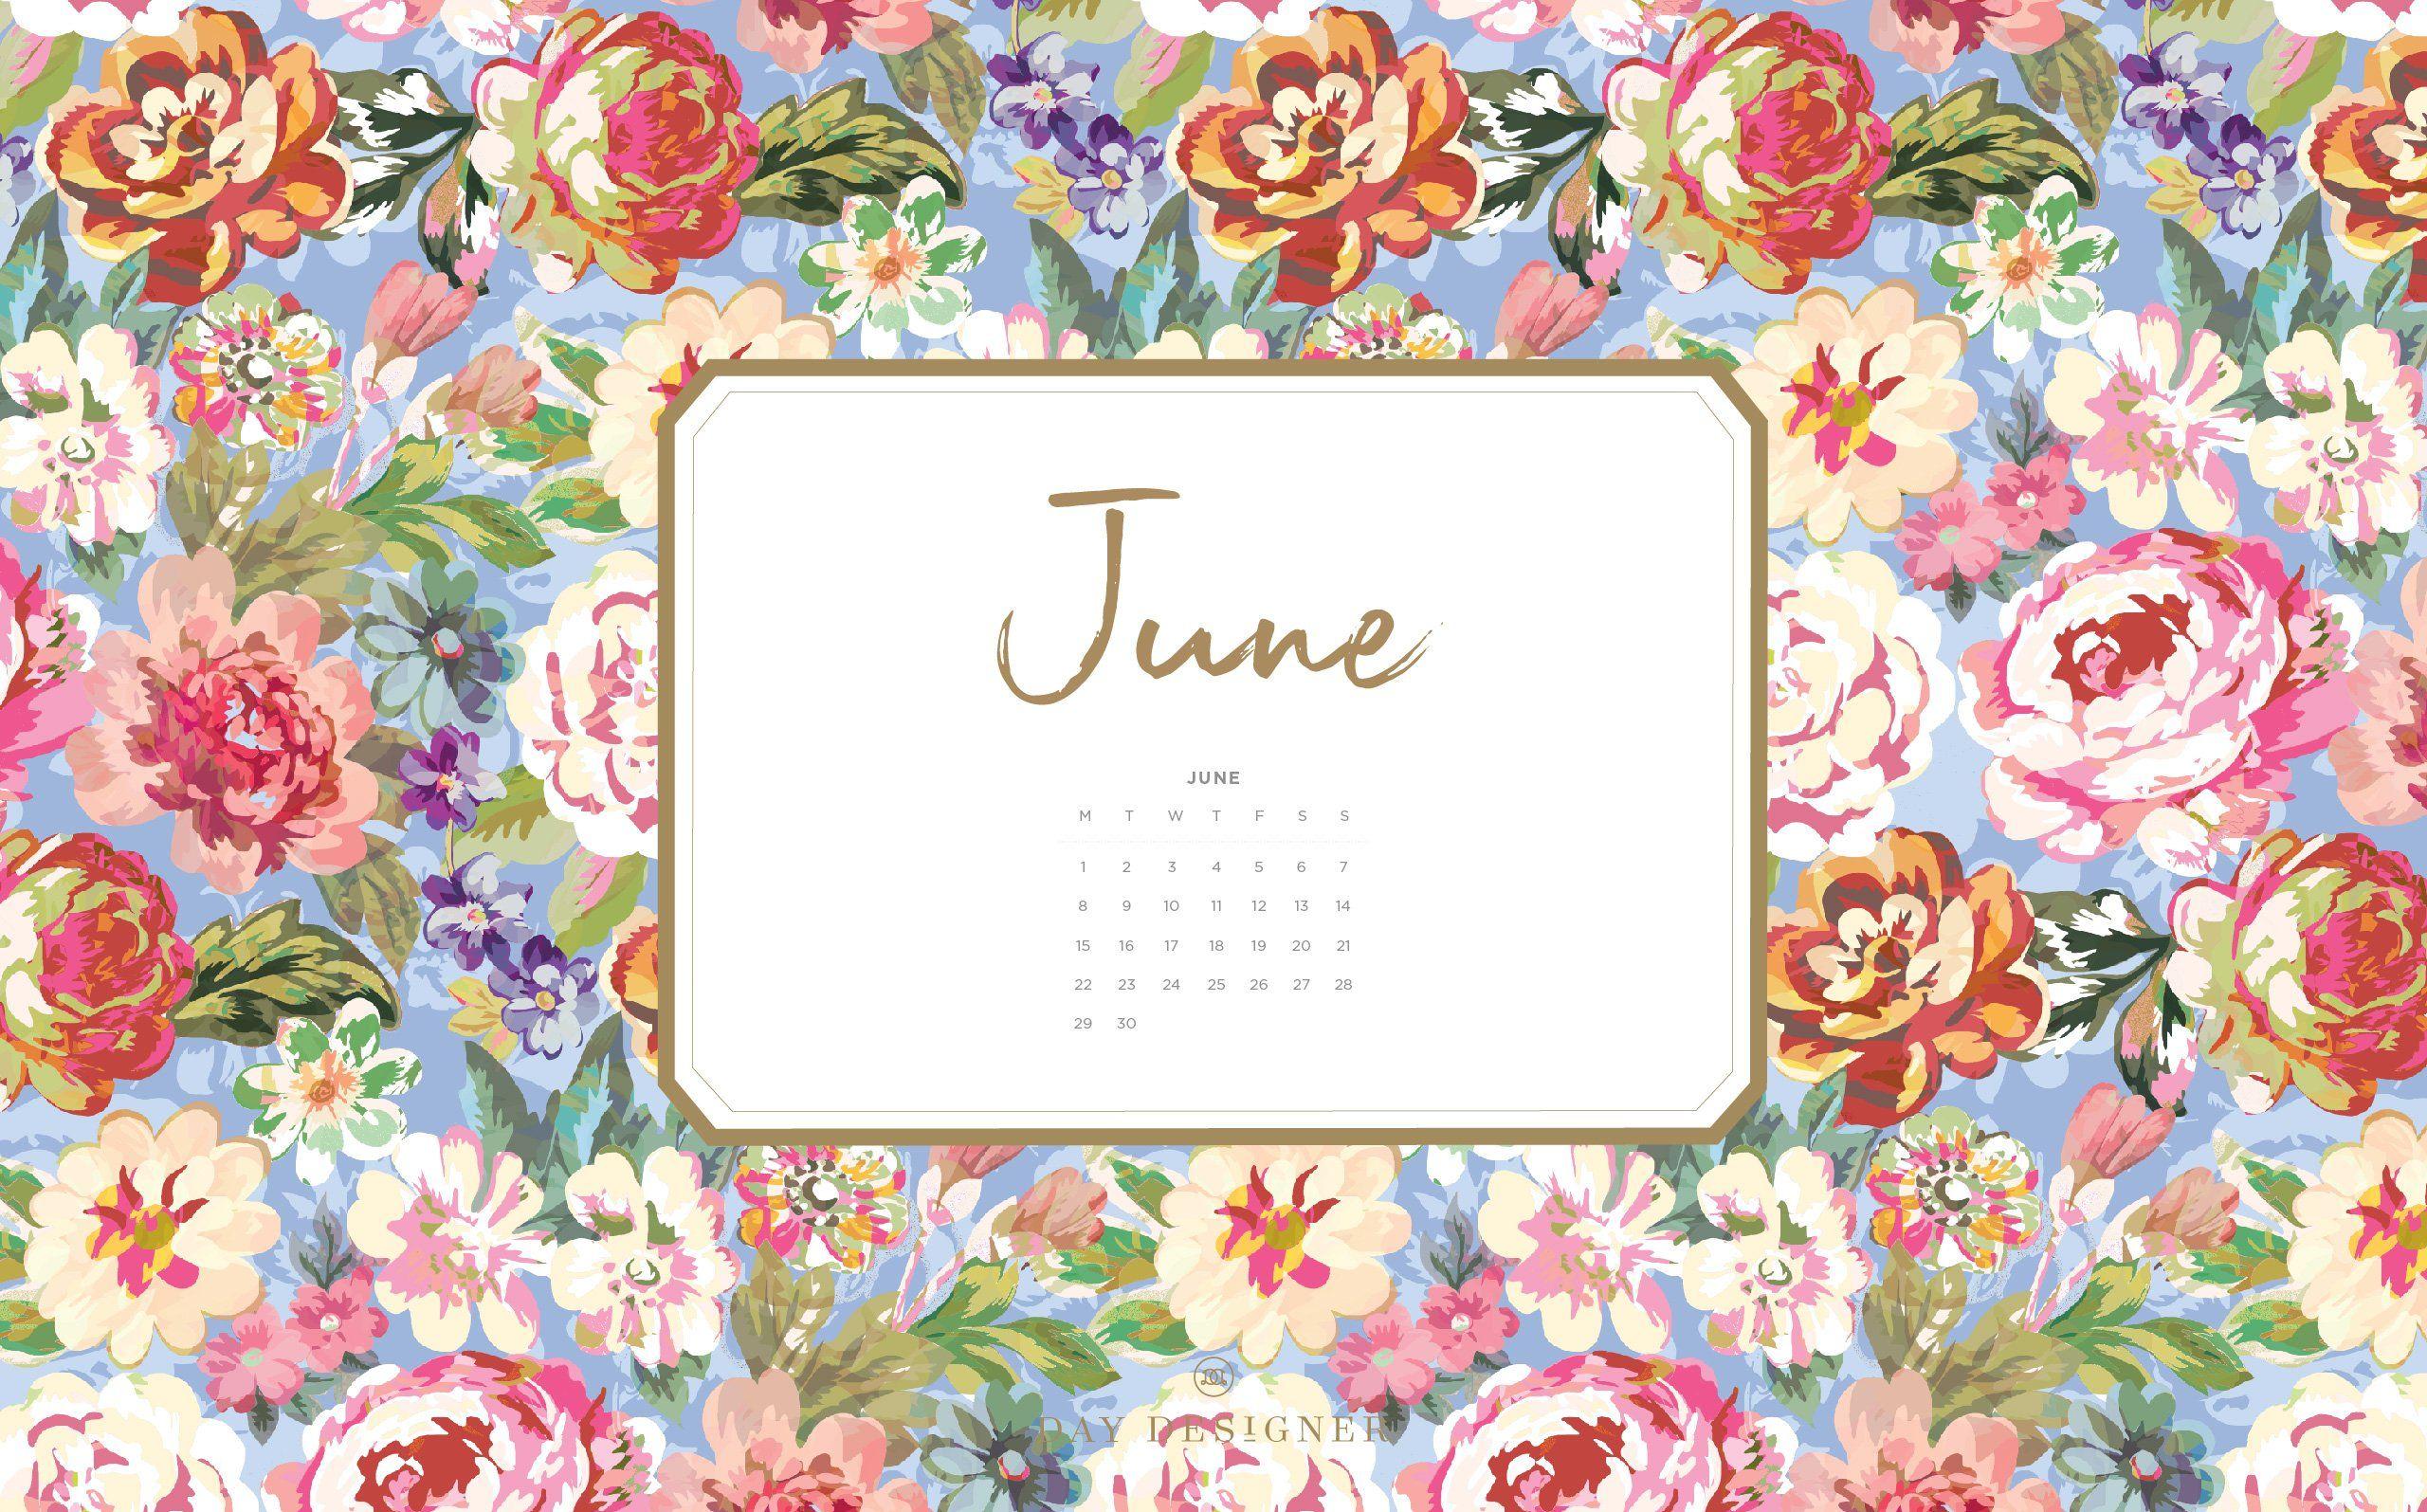 June 2021 Calendar Wallpapers Top Free June 2021 Calendar Backgrounds